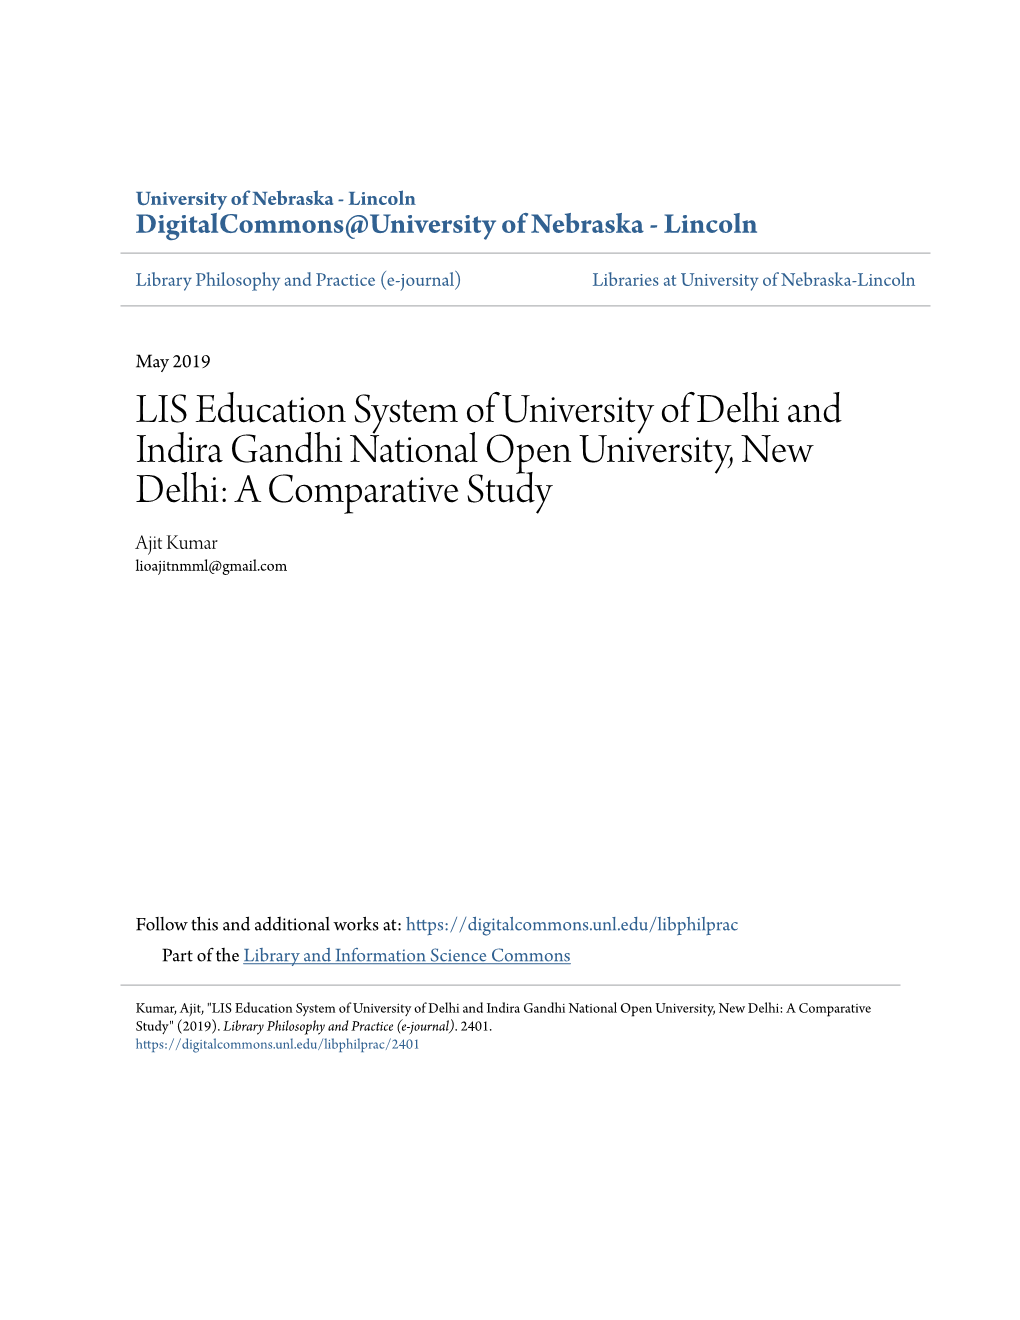 LIS Education System of University of Delhi and Indira Gandhi National Open University, New Delhi: a Comparative Study Ajit Kumar Lioajitnmml@Gmail.Com